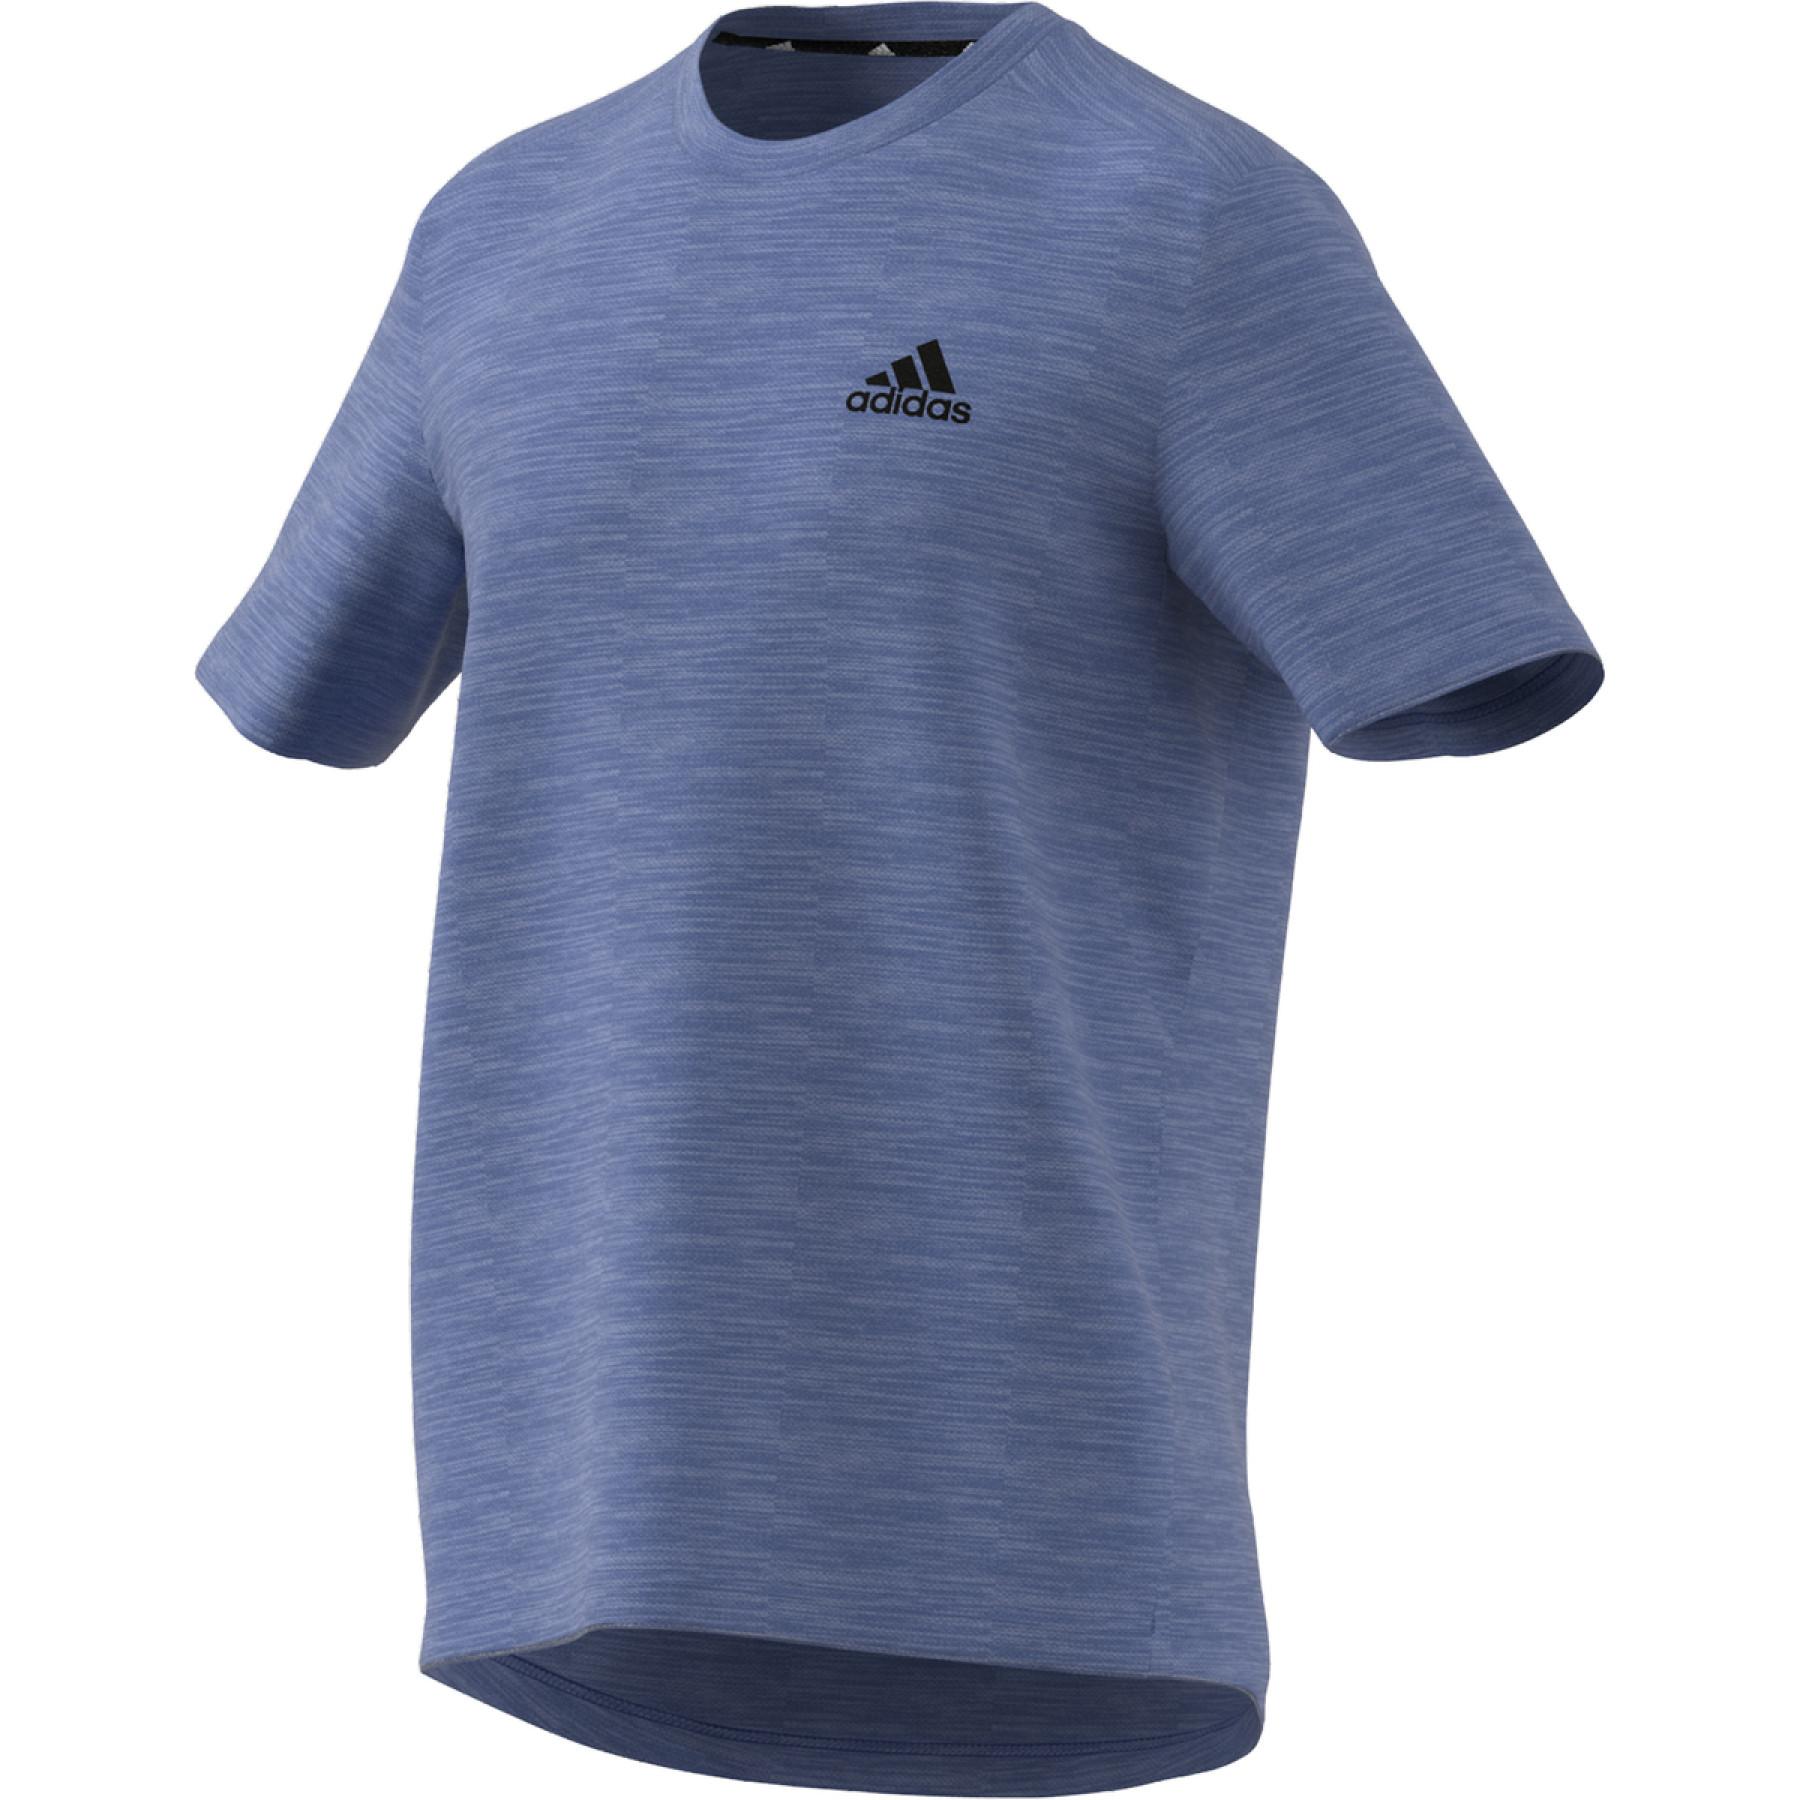 Camiseta elástica adidas Aeroready Designed To Move Sport